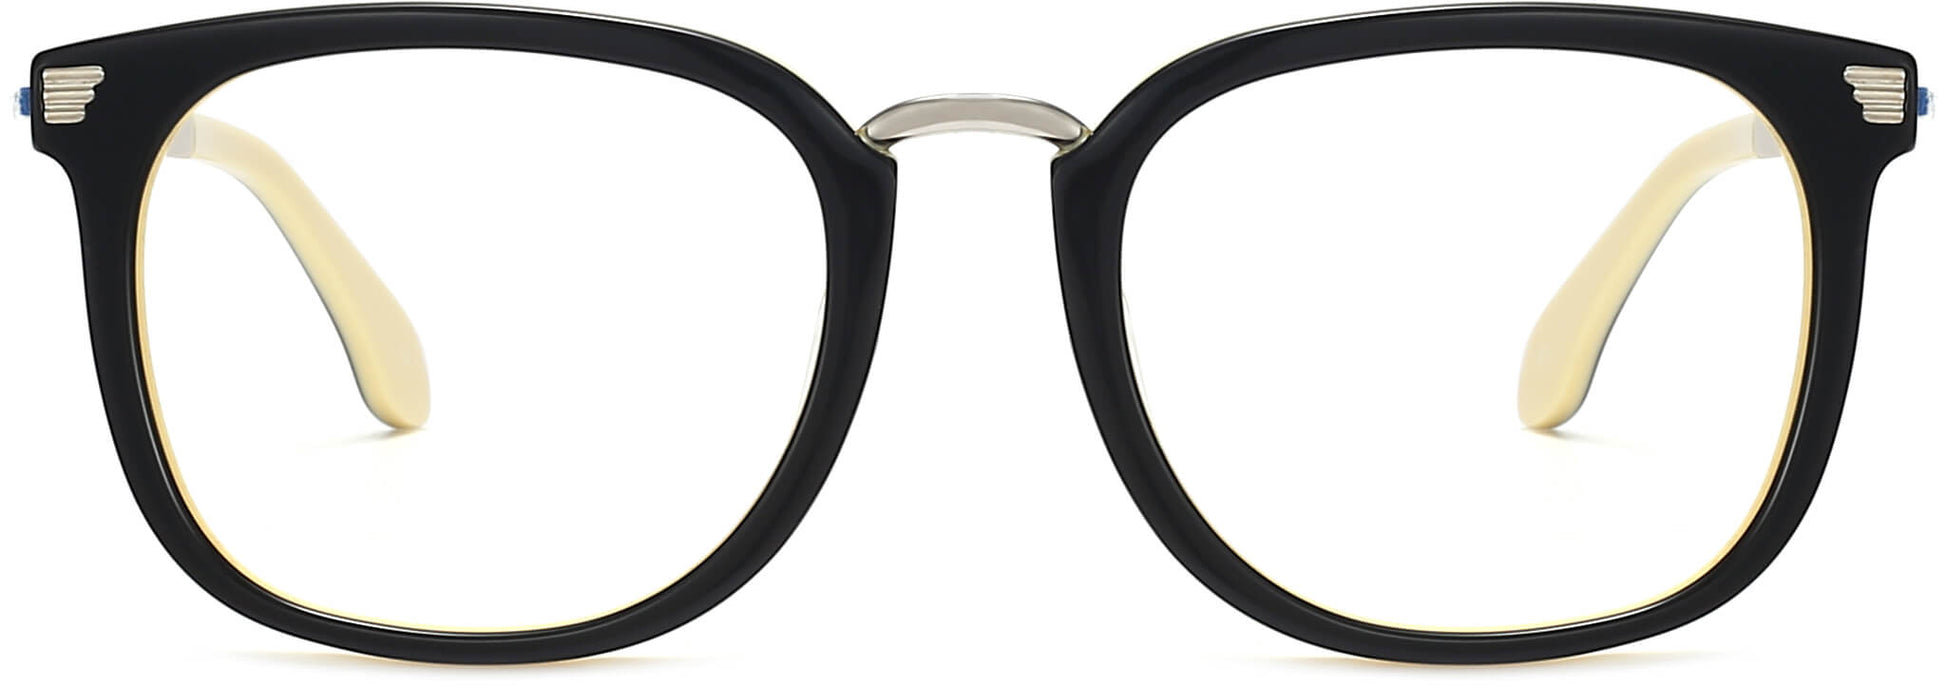 Martha Round Black Eyeglasses from ANRRI, front view